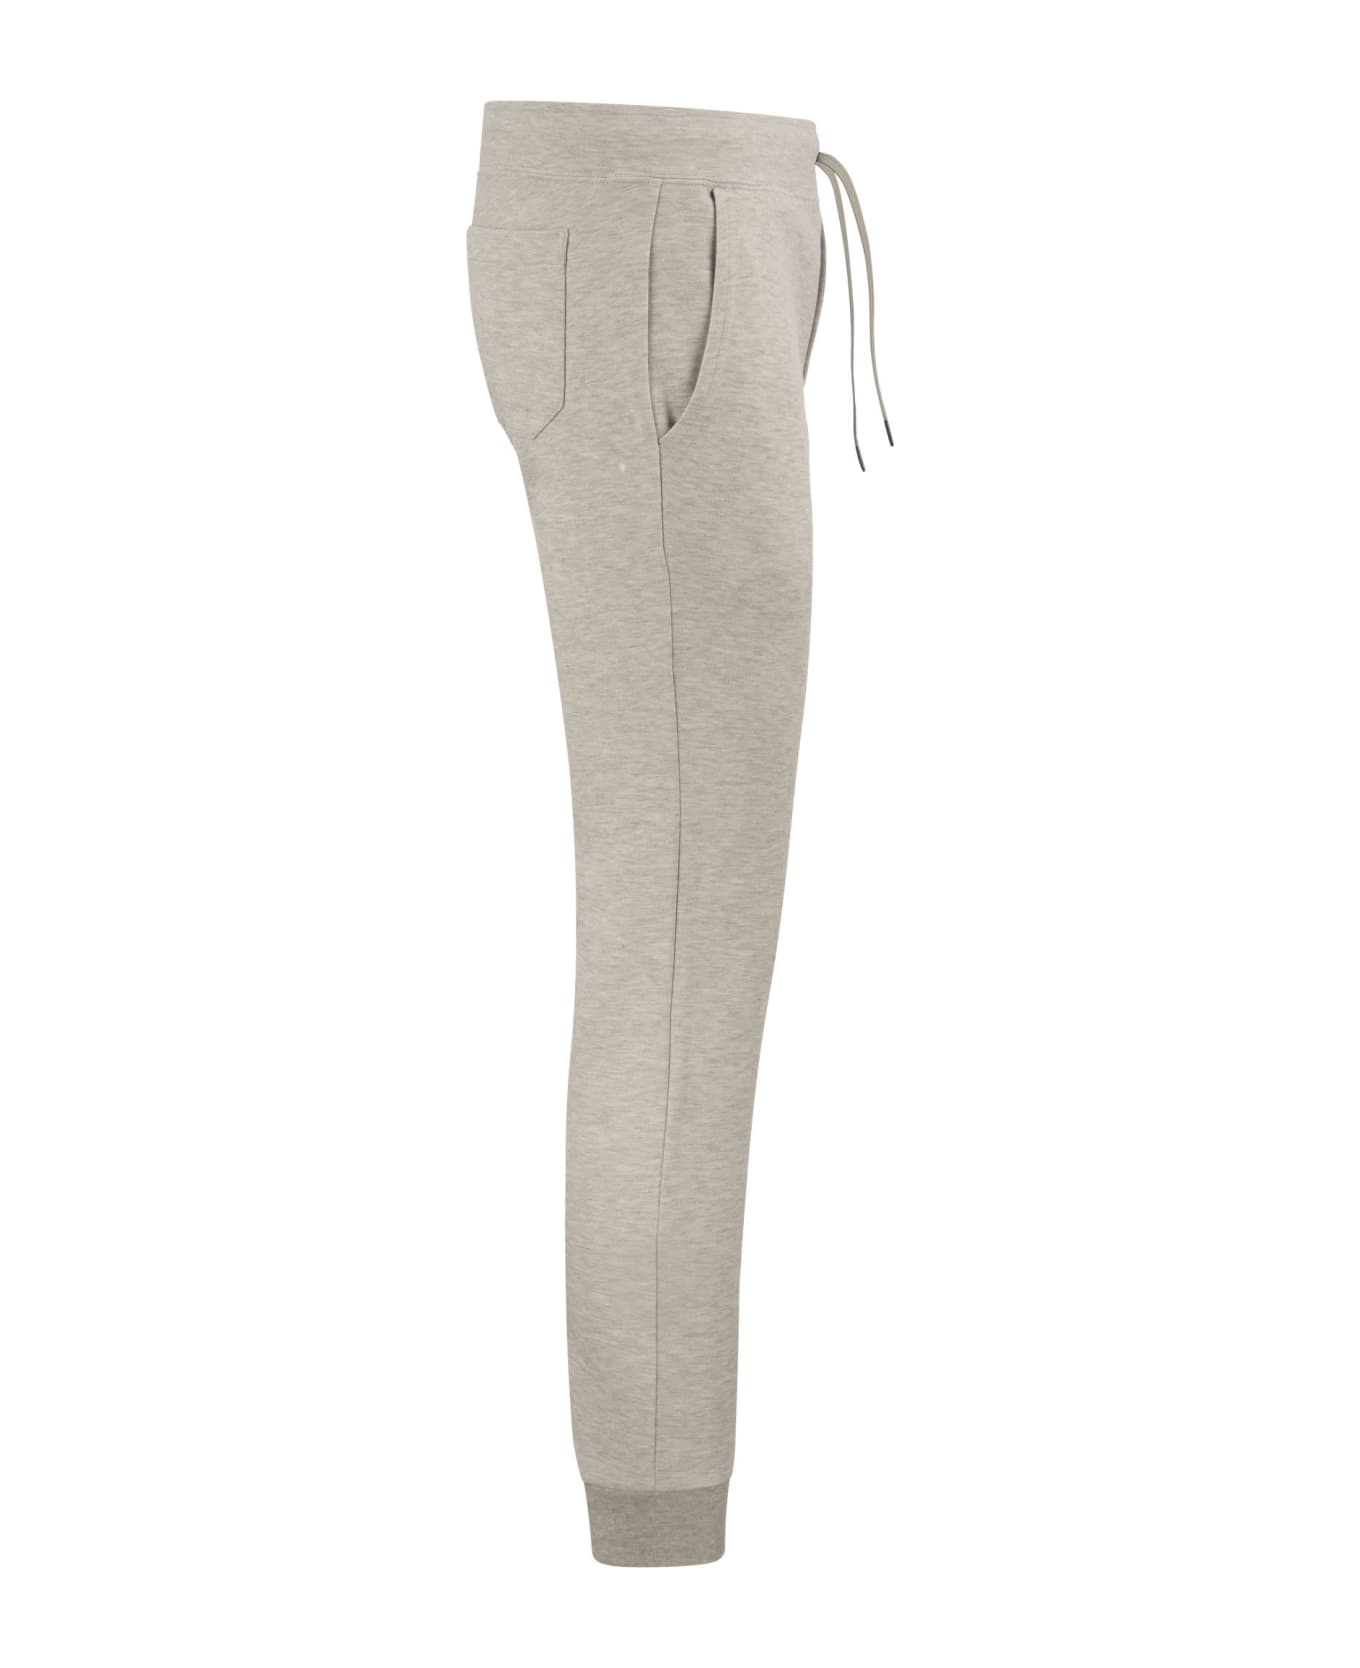 Polo Ralph Lauren Lgith Grey Cotton Pants - Light Grey